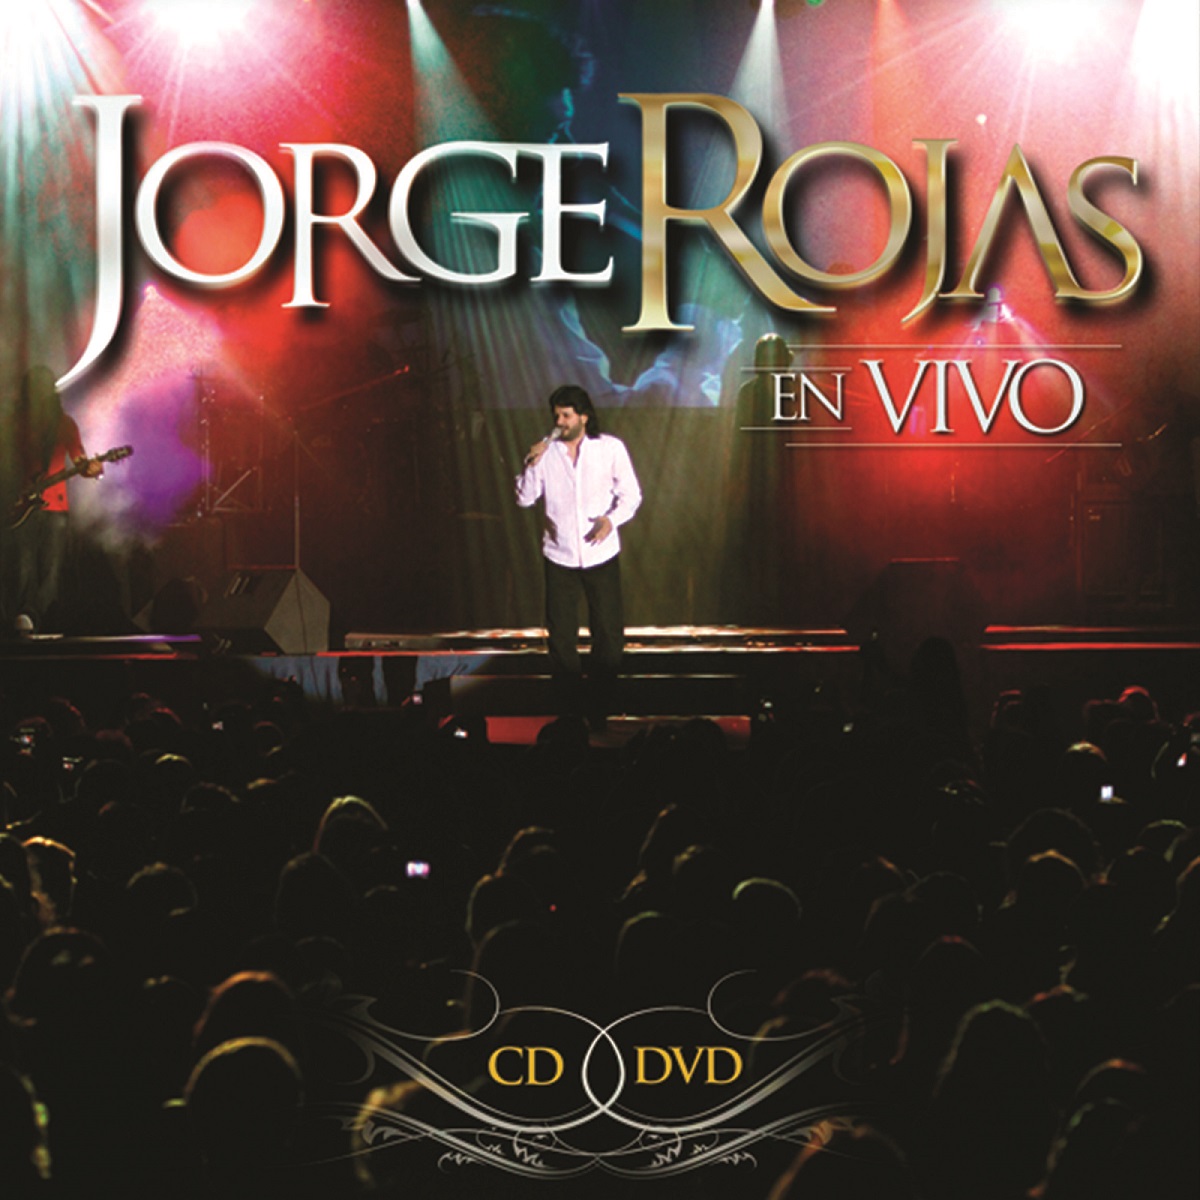 Jorge Rojas en vivo - Obras Jorge Rosas